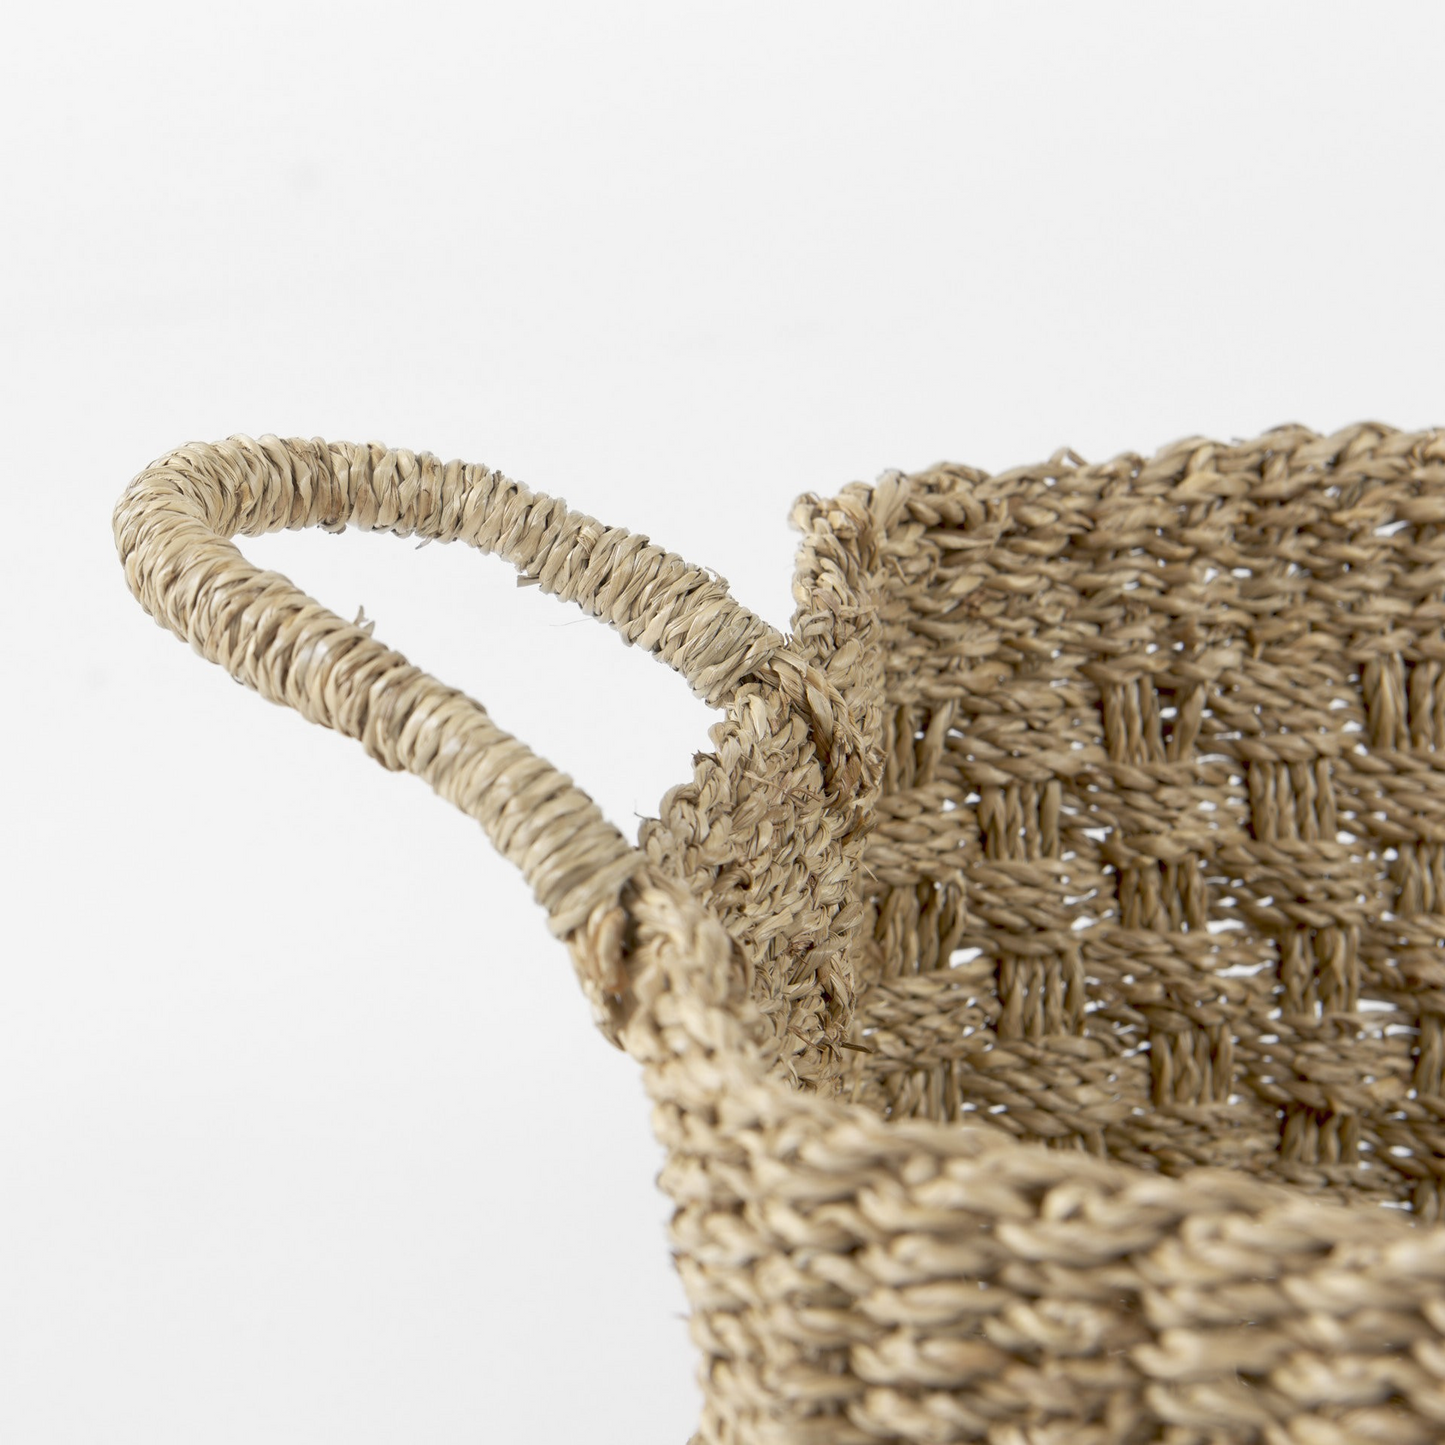 Weaved Wicker Storage Baskets (Set of 3)